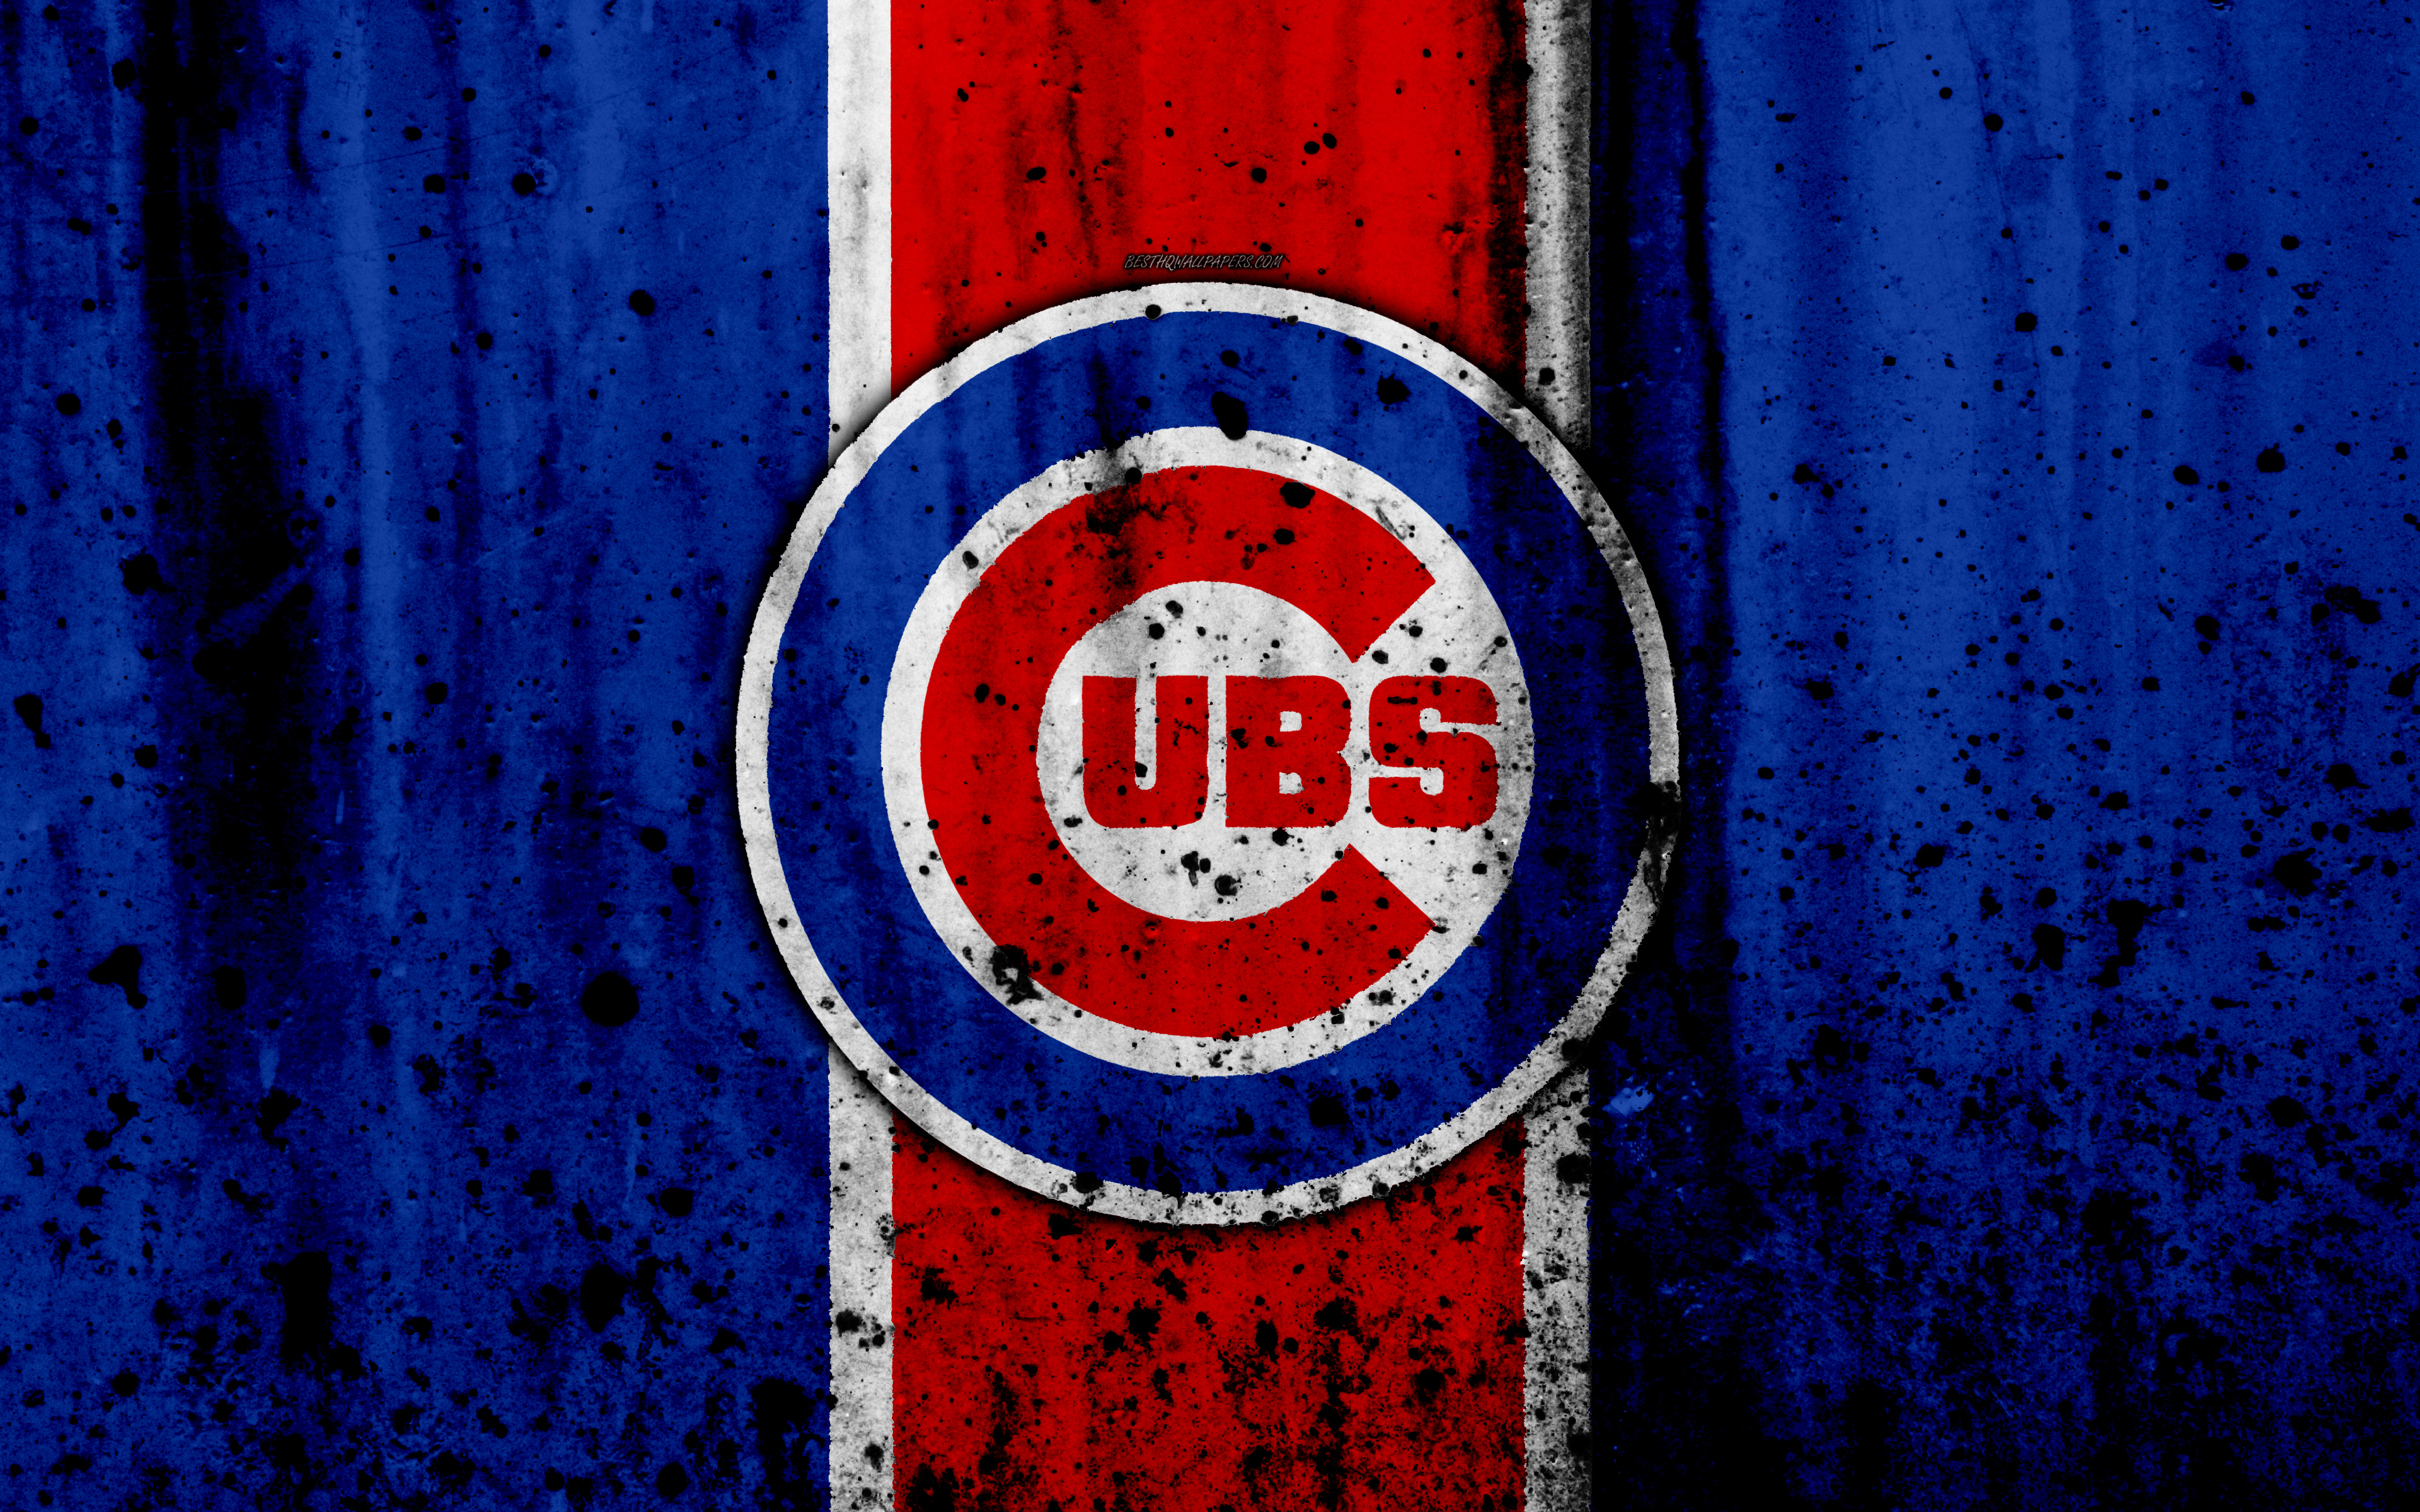 Cubs Baseball Wallpapers